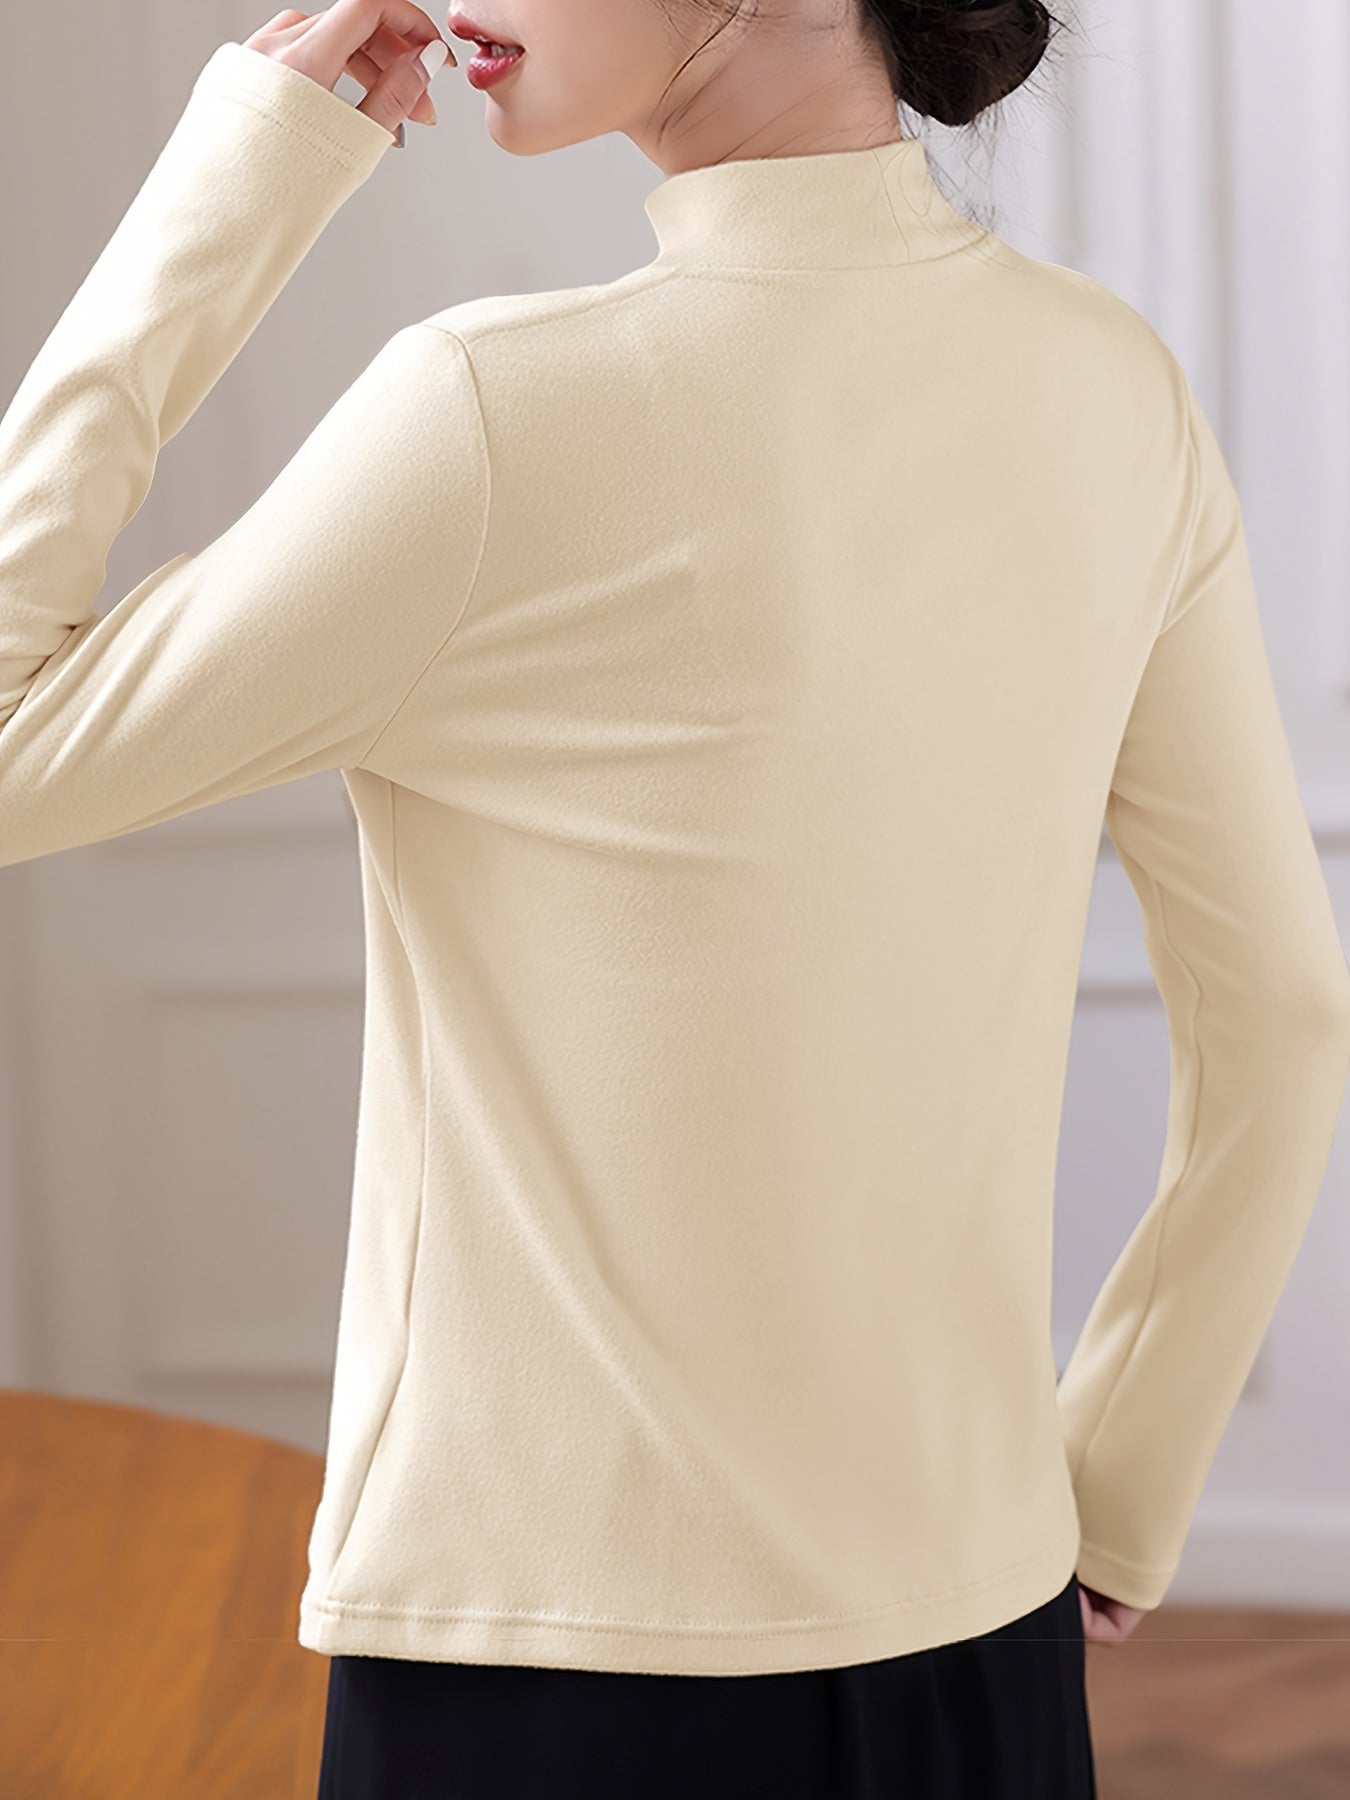 Antmvs Simple Solid Thermal Underwear, Soft & Comfortable Long Sleeve Plush Top, Women's Lingerie & Sleepwear